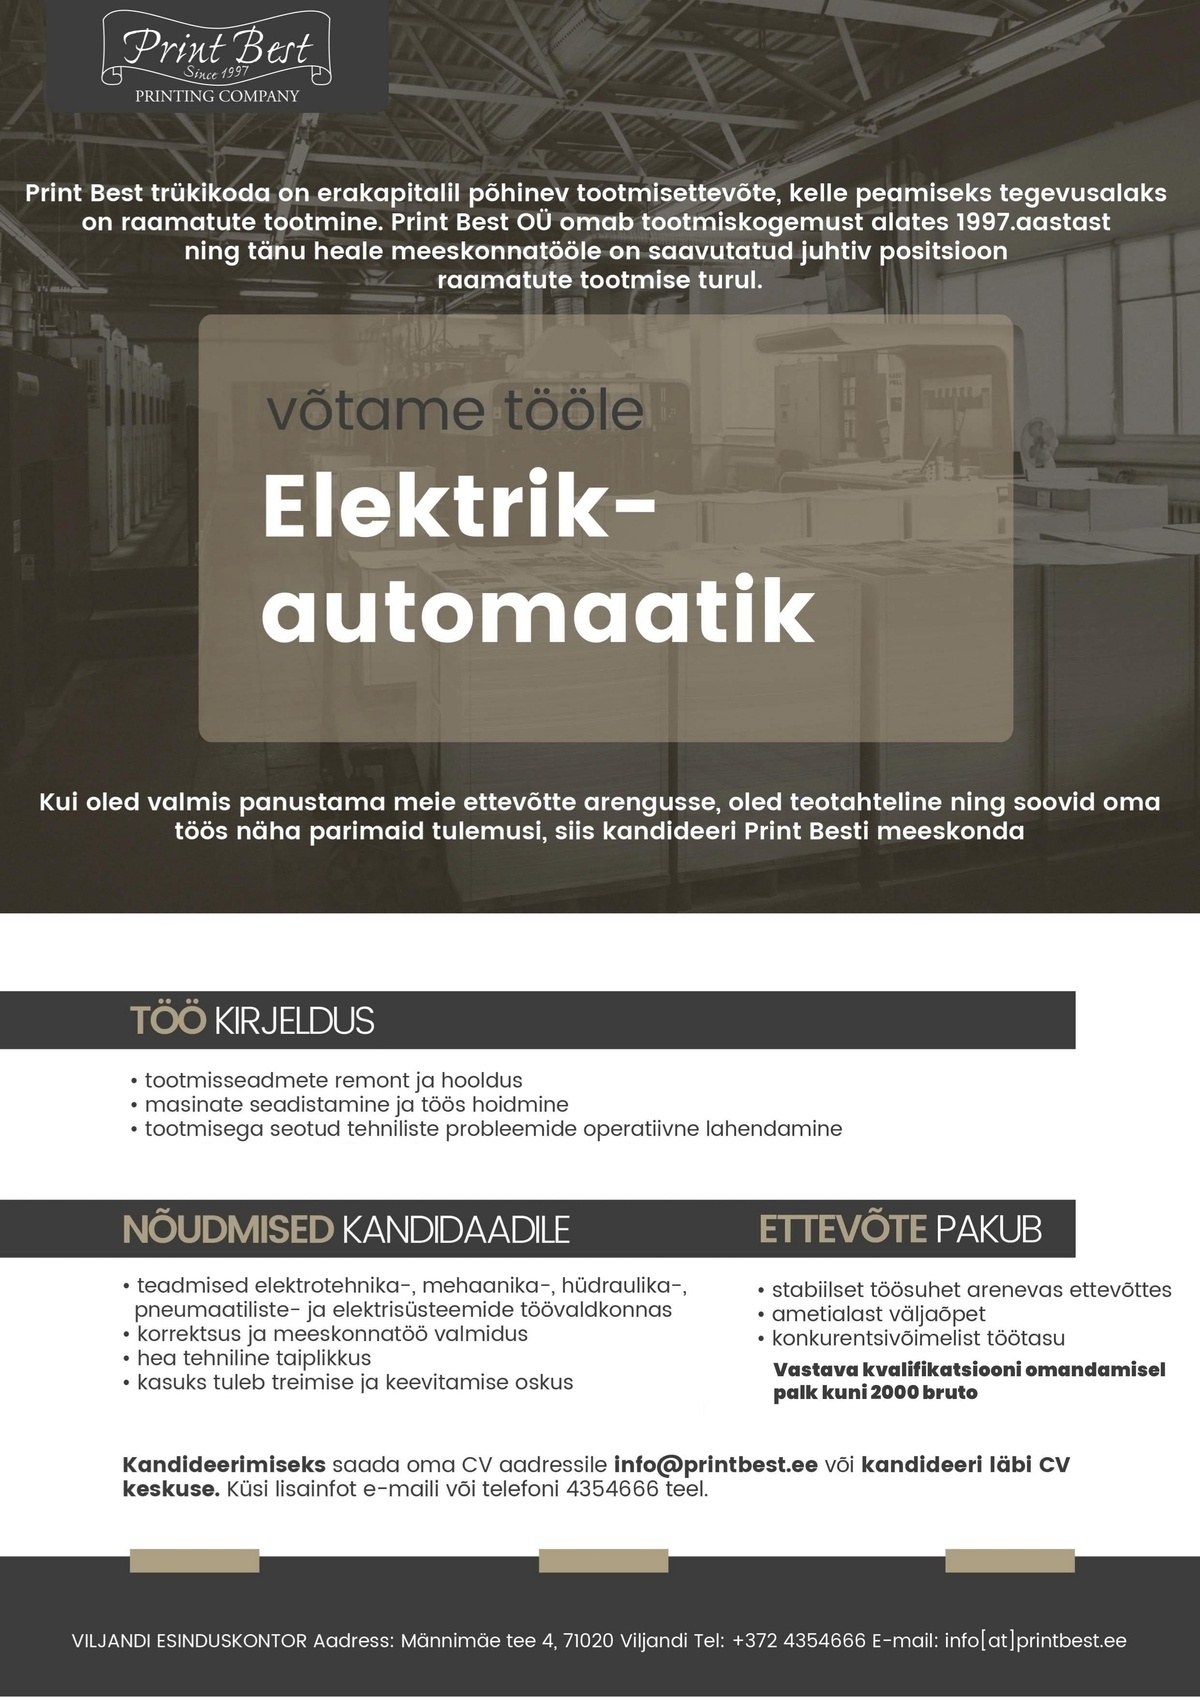 Print Best OÜ Elektrik-automaatik